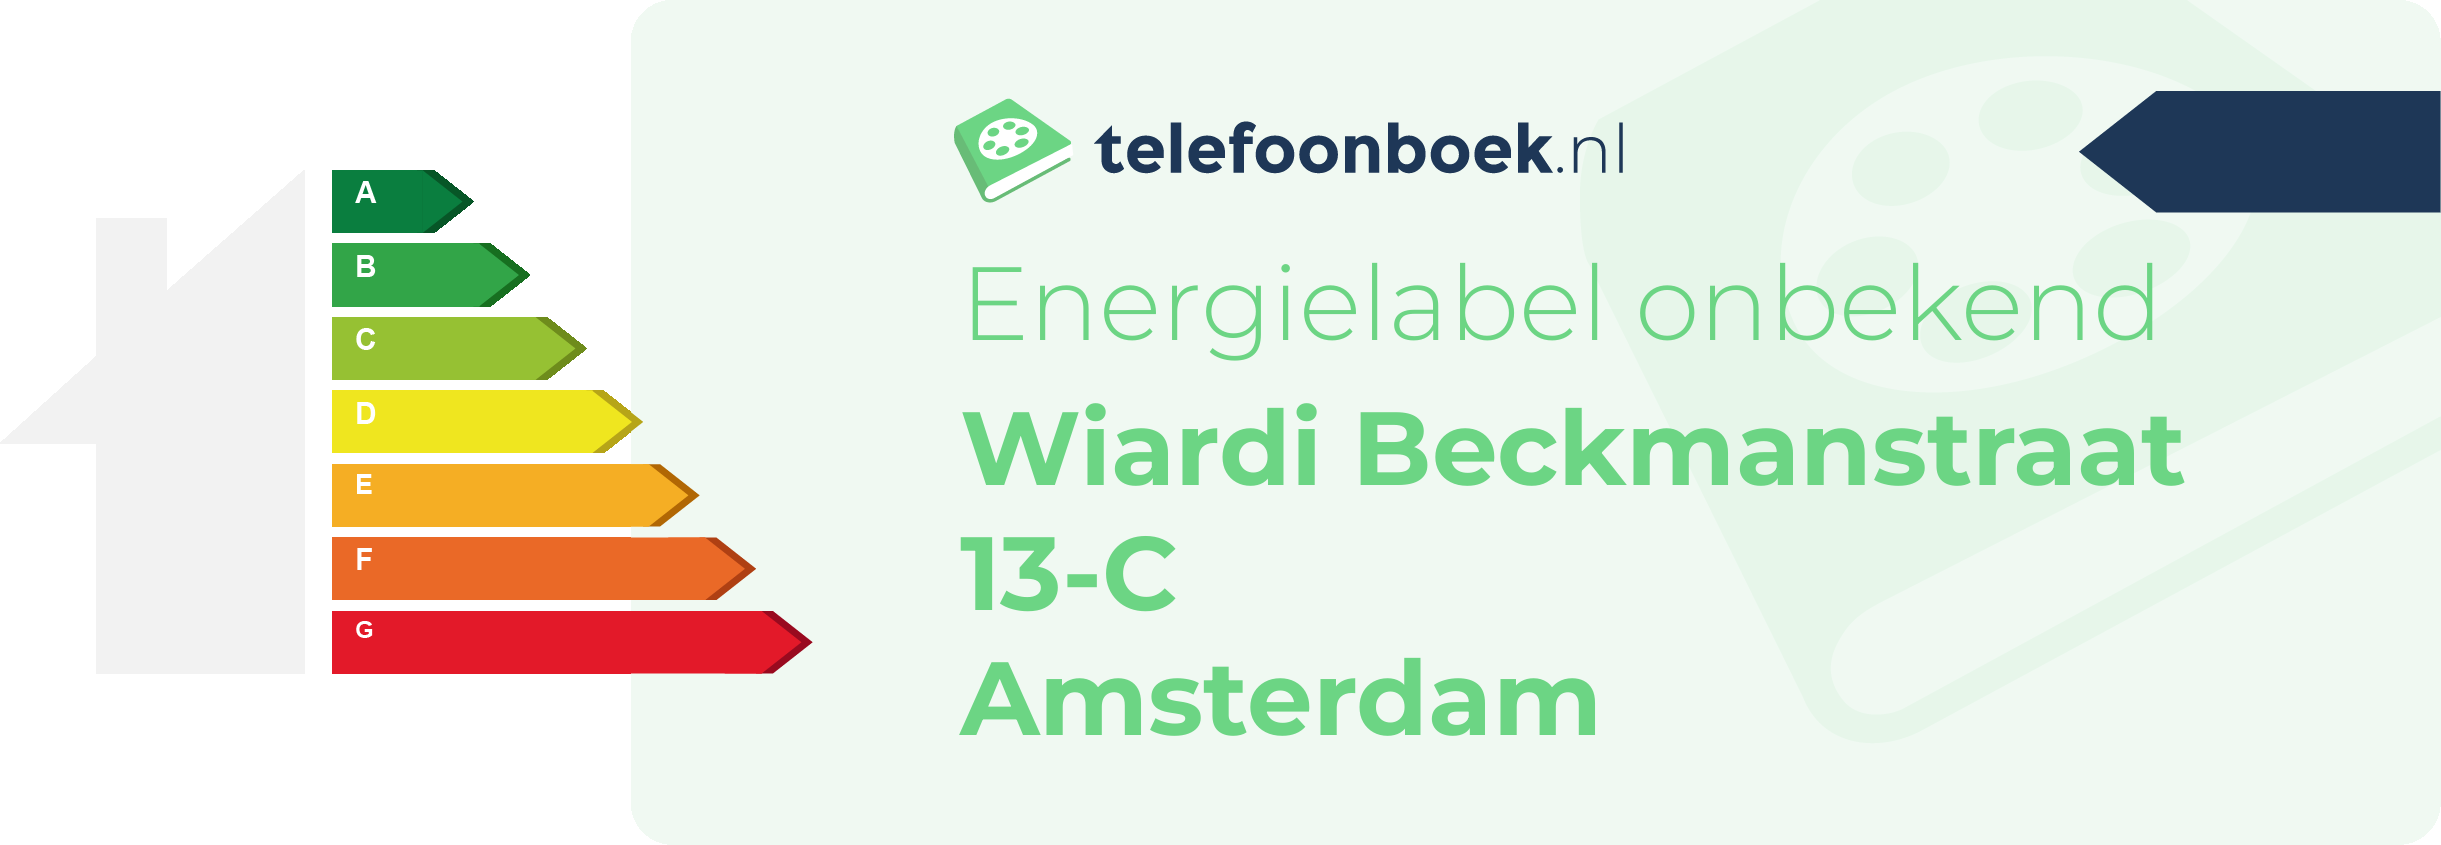 Energielabel Wiardi Beckmanstraat 13-C Amsterdam